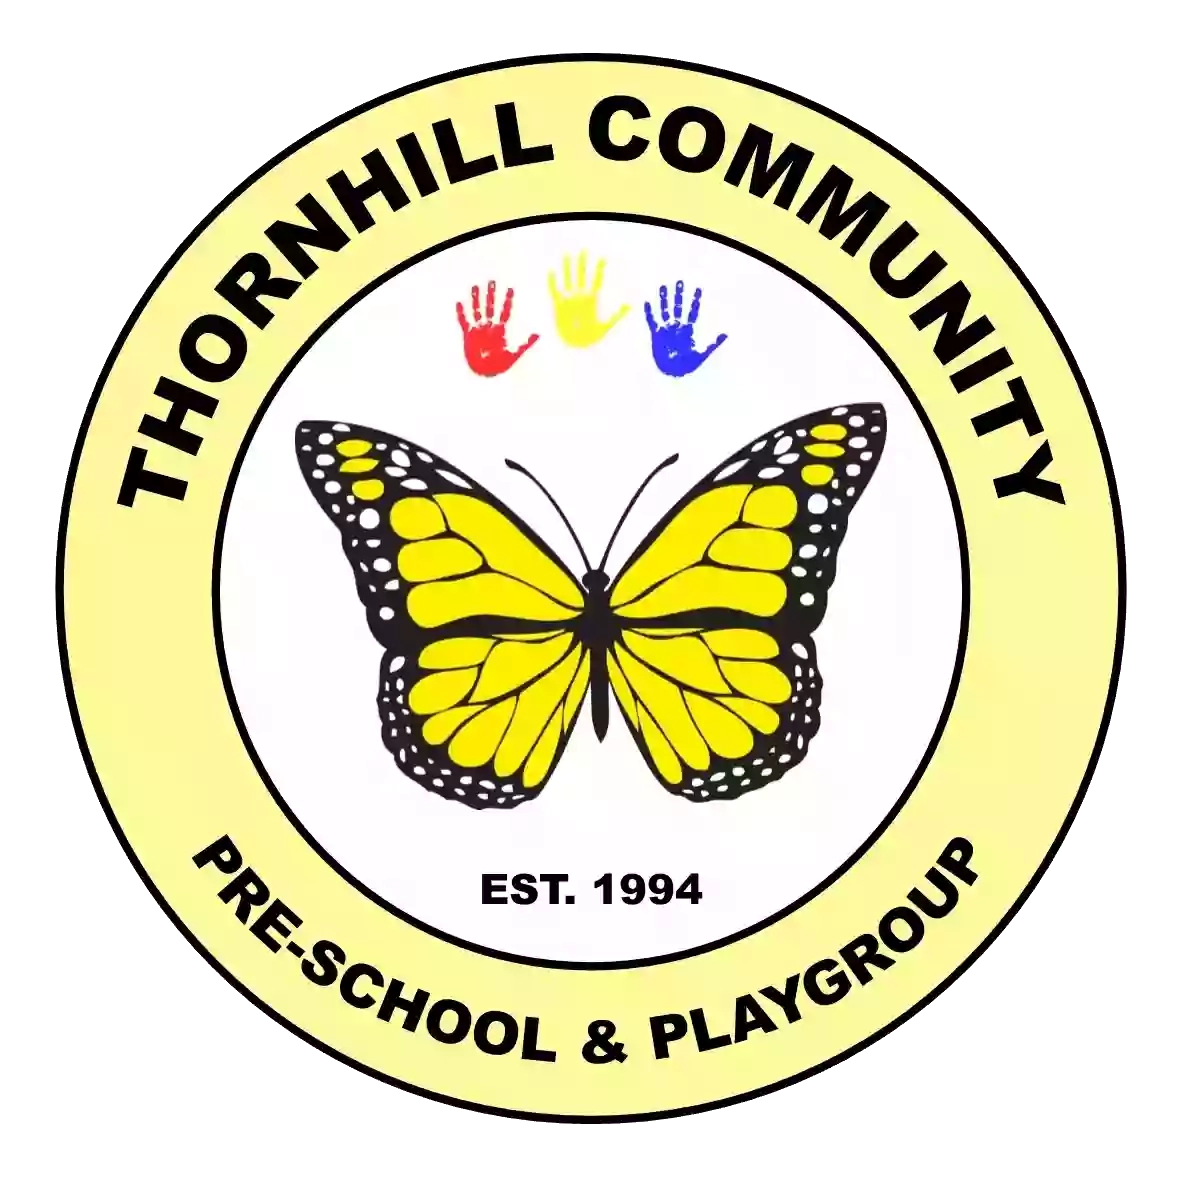 Thornhill Community Pre-school